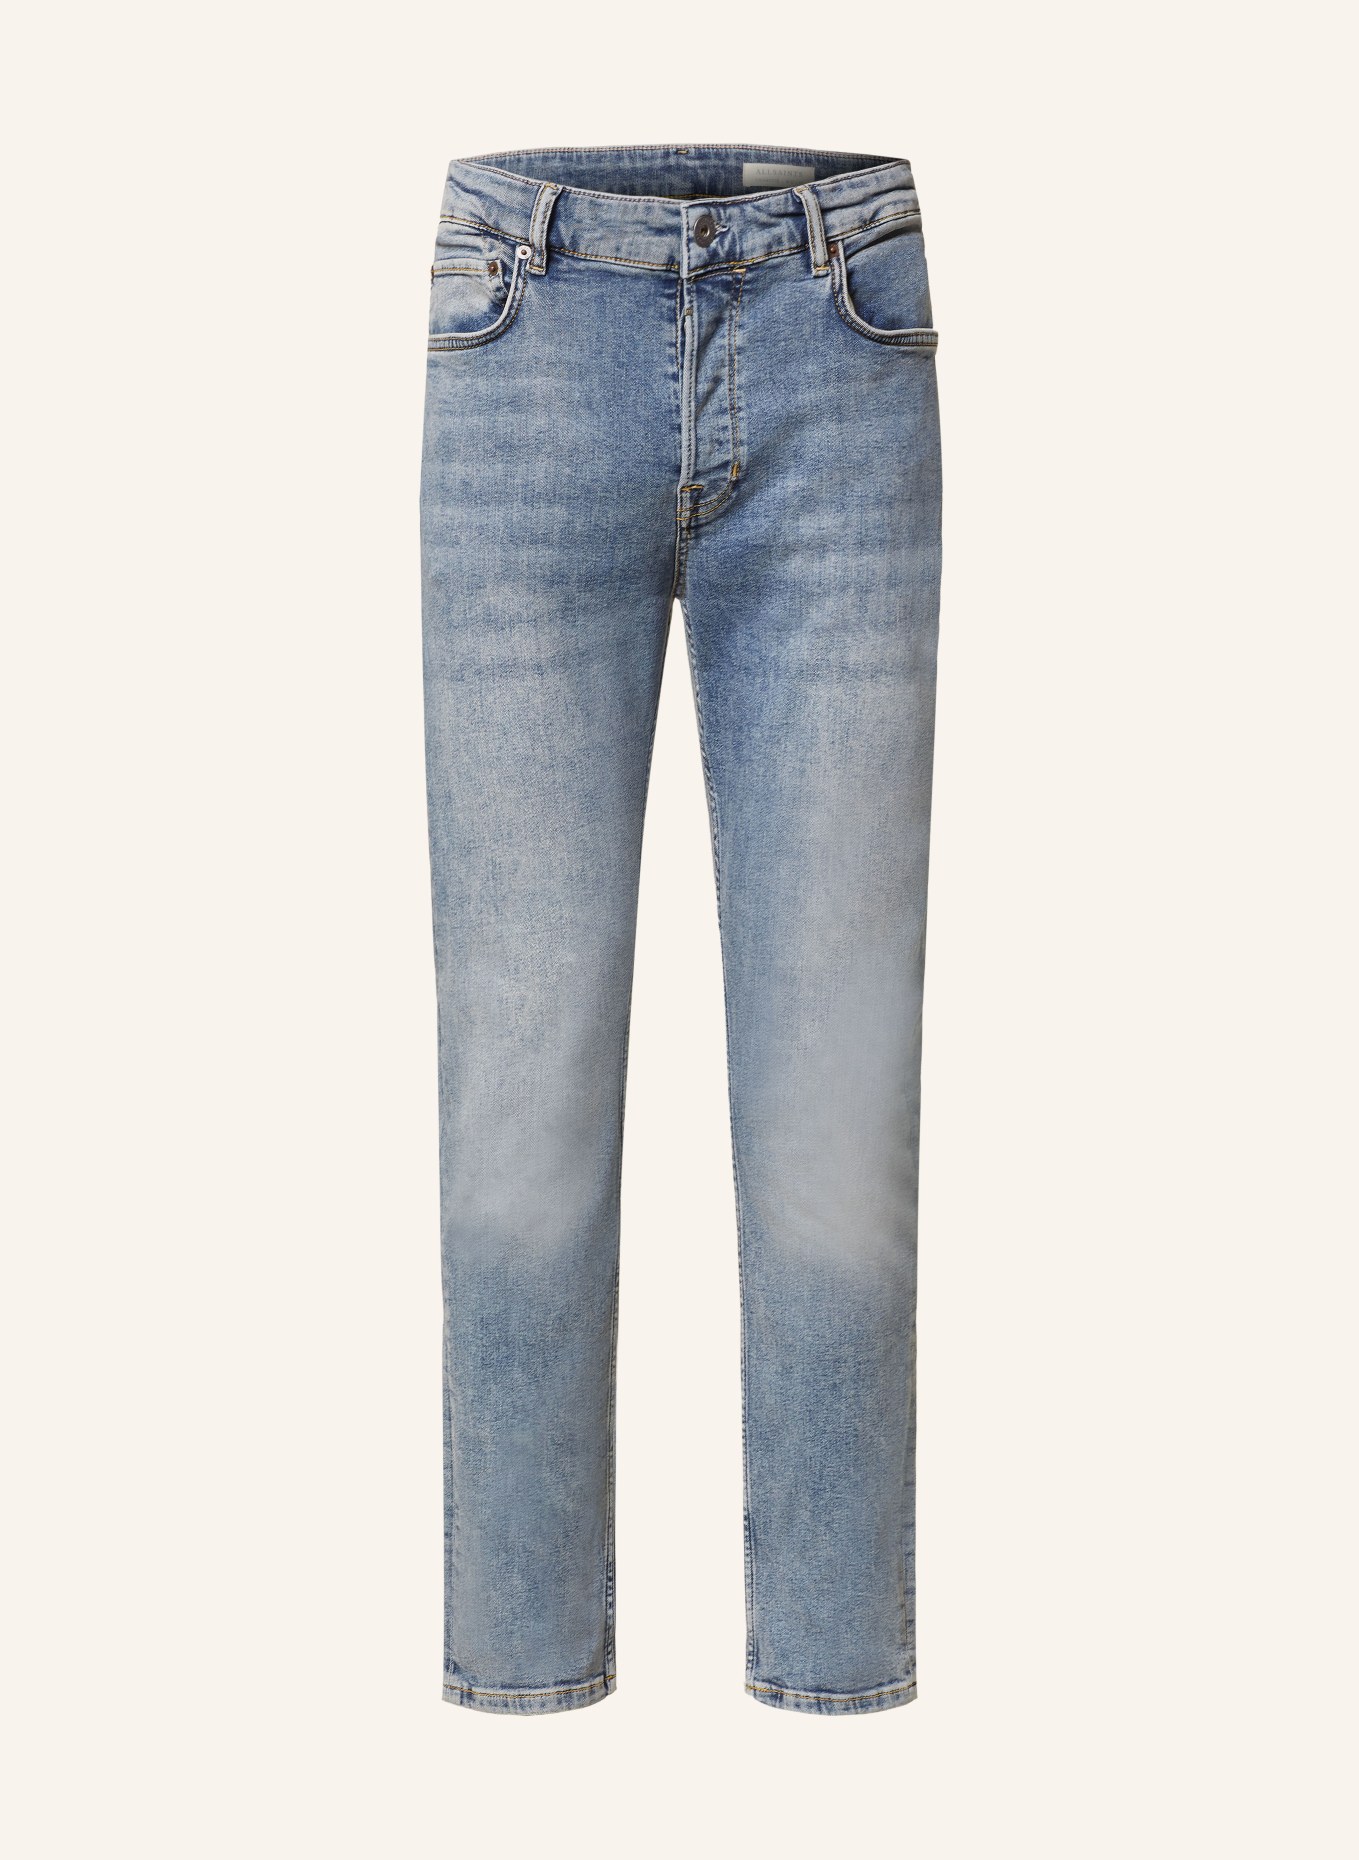 ALLSAINTS Skinny Jeans CIGARETTE Slim Fit, Farbe: 2824 Indigo Blue (Bild 1)